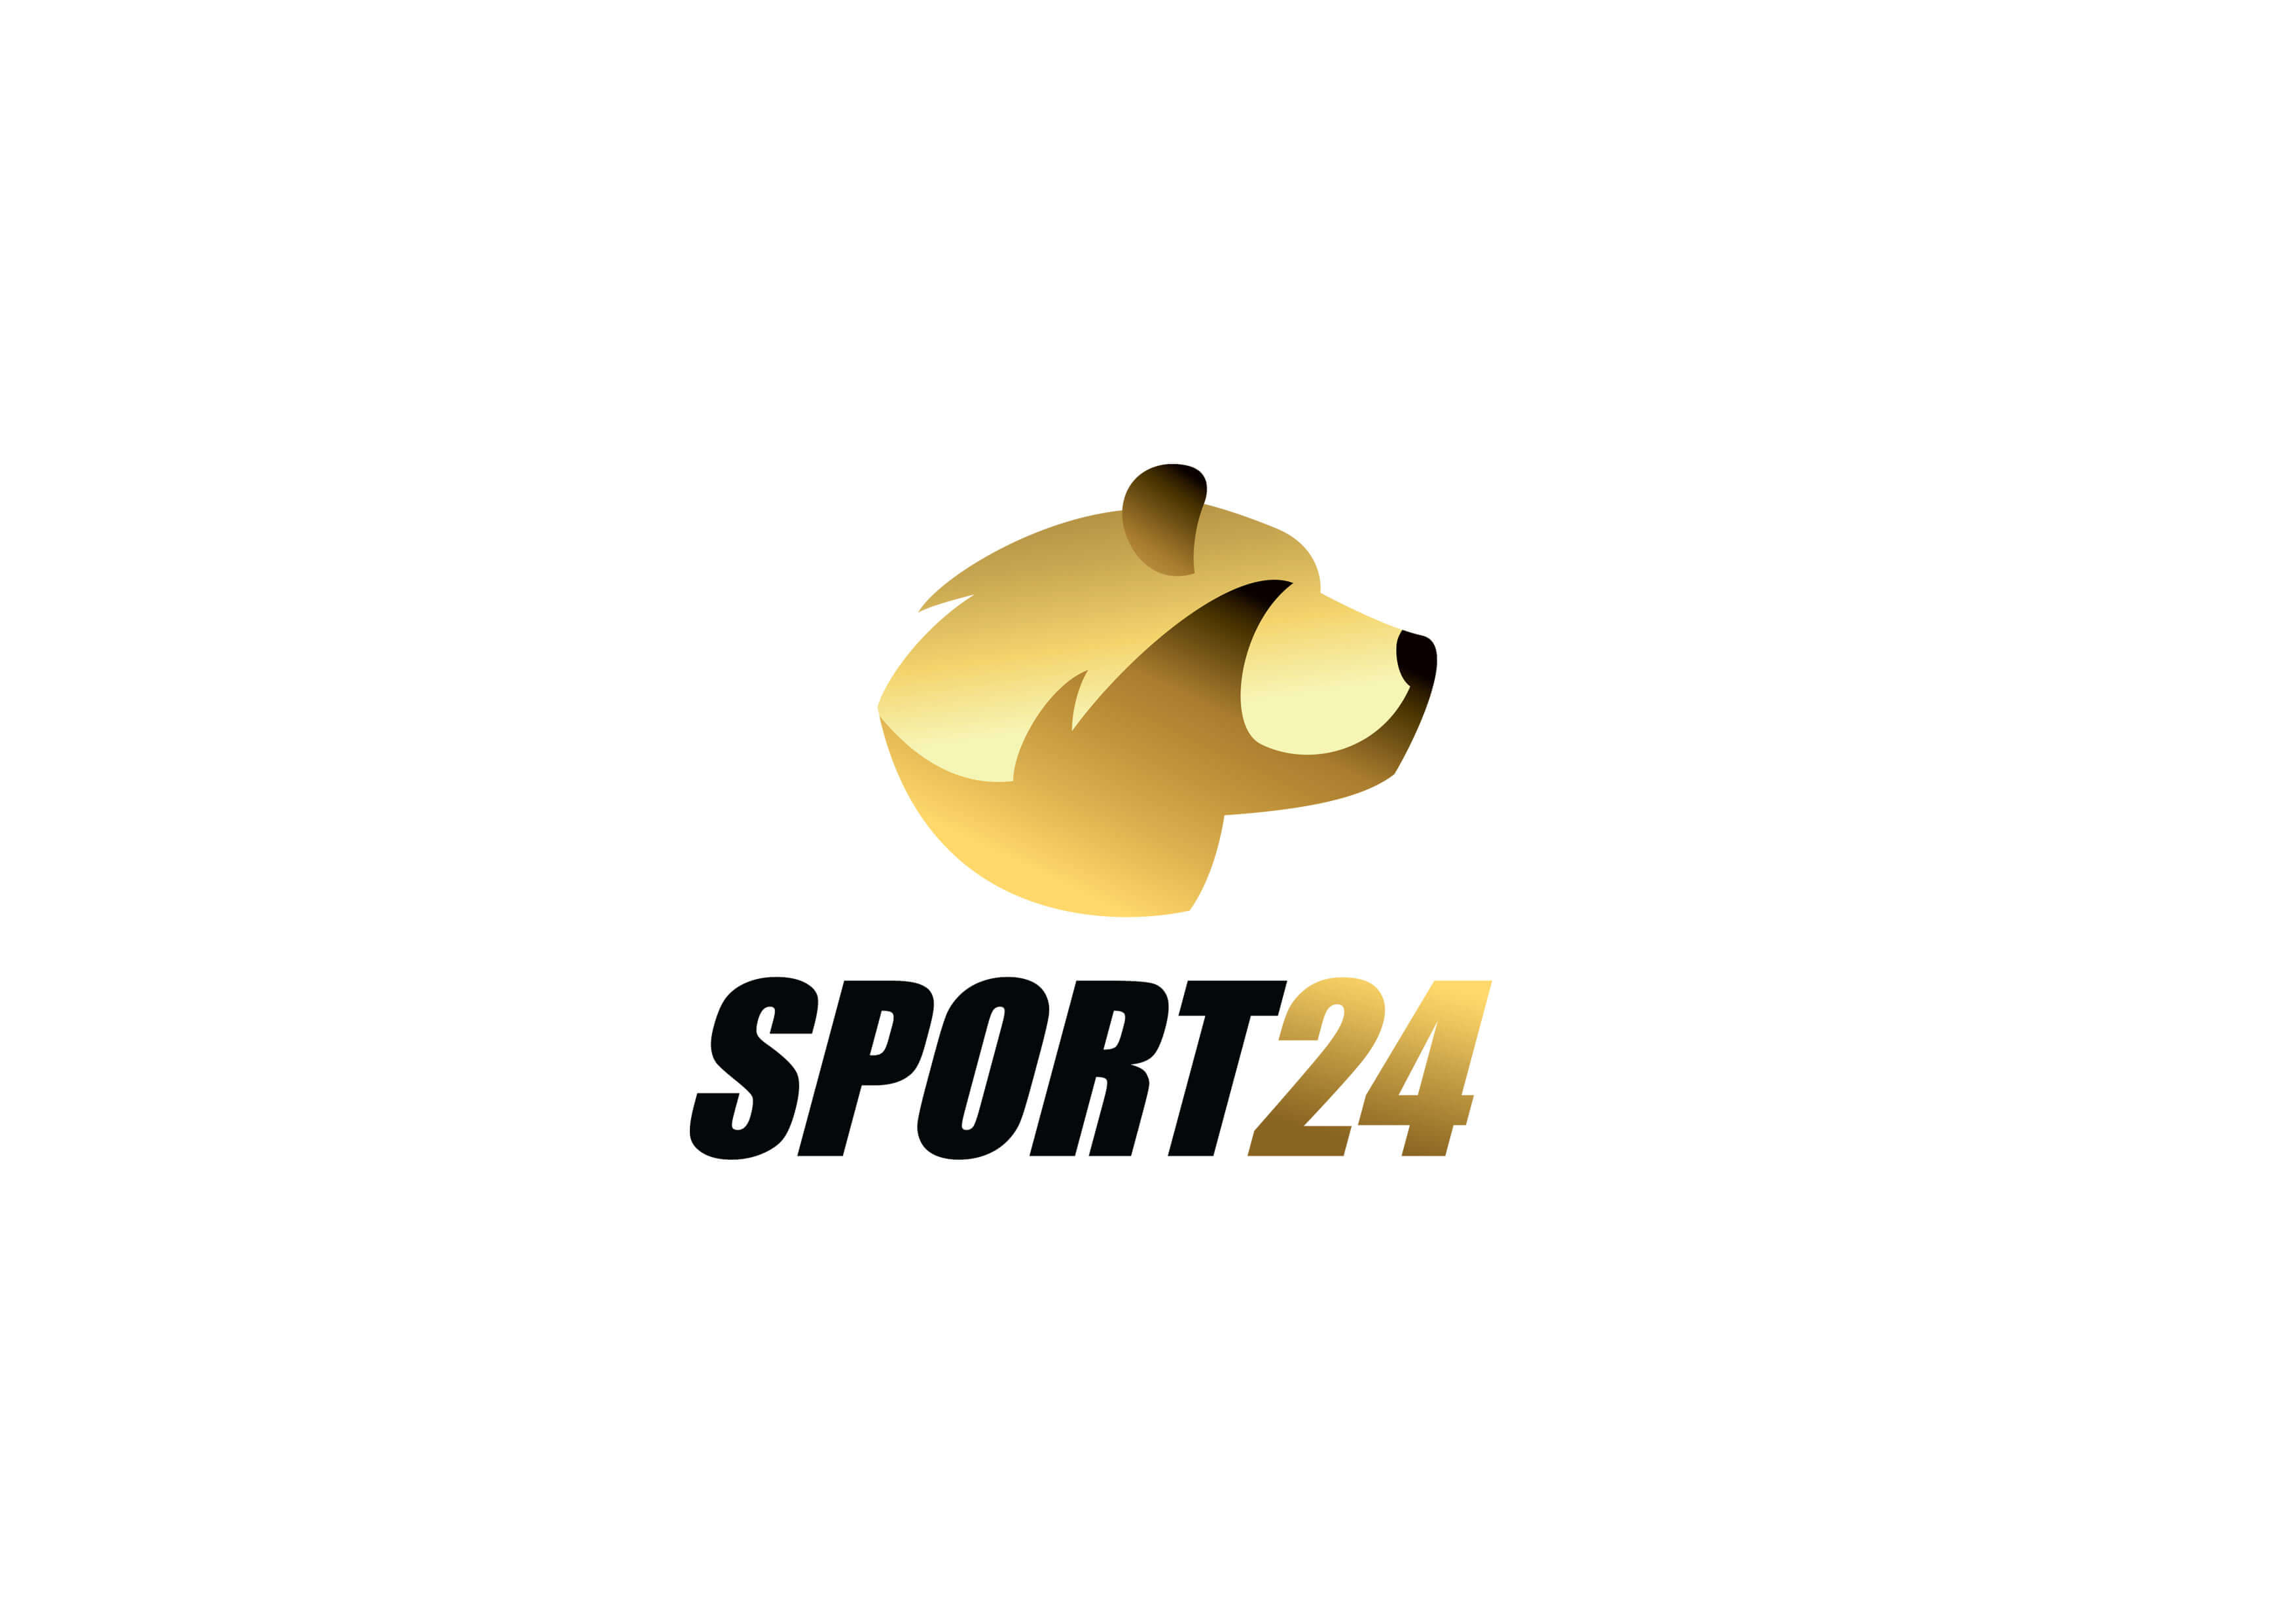 sport24 identity process 10